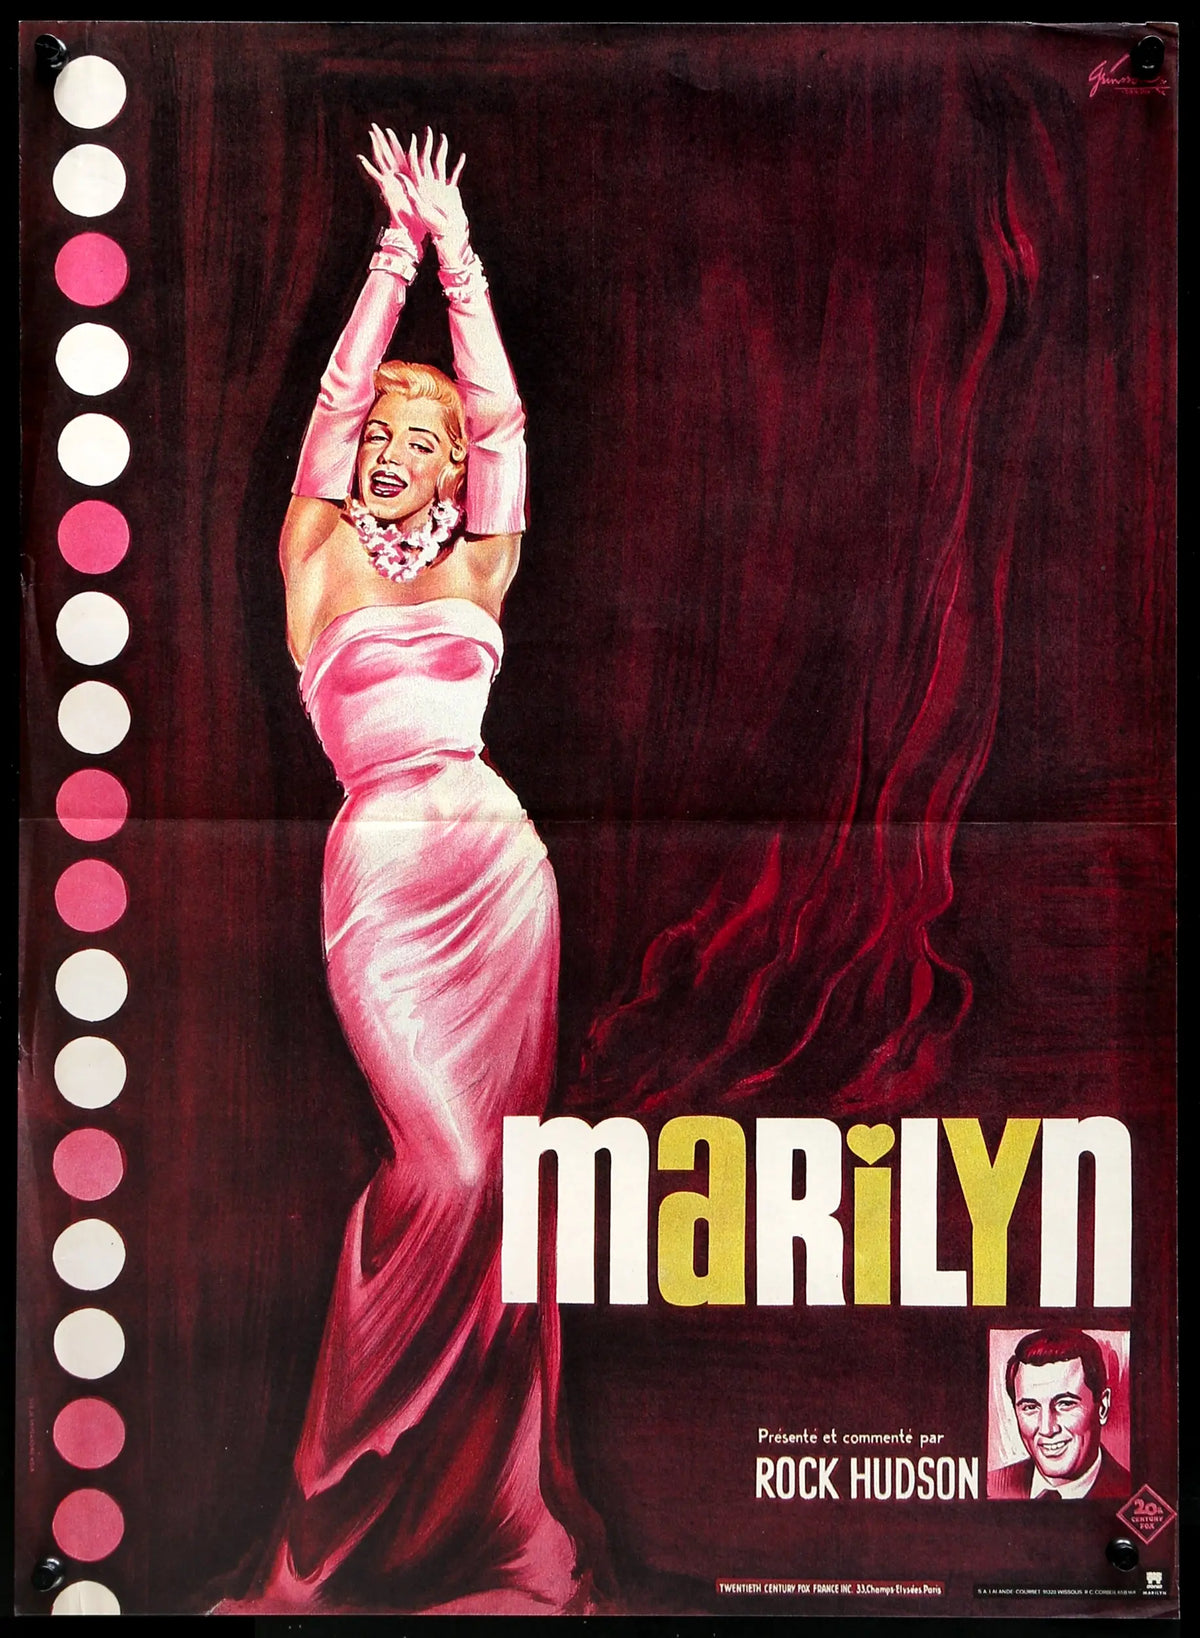 Marilyn (1963) original movie poster for sale at Original Film Art